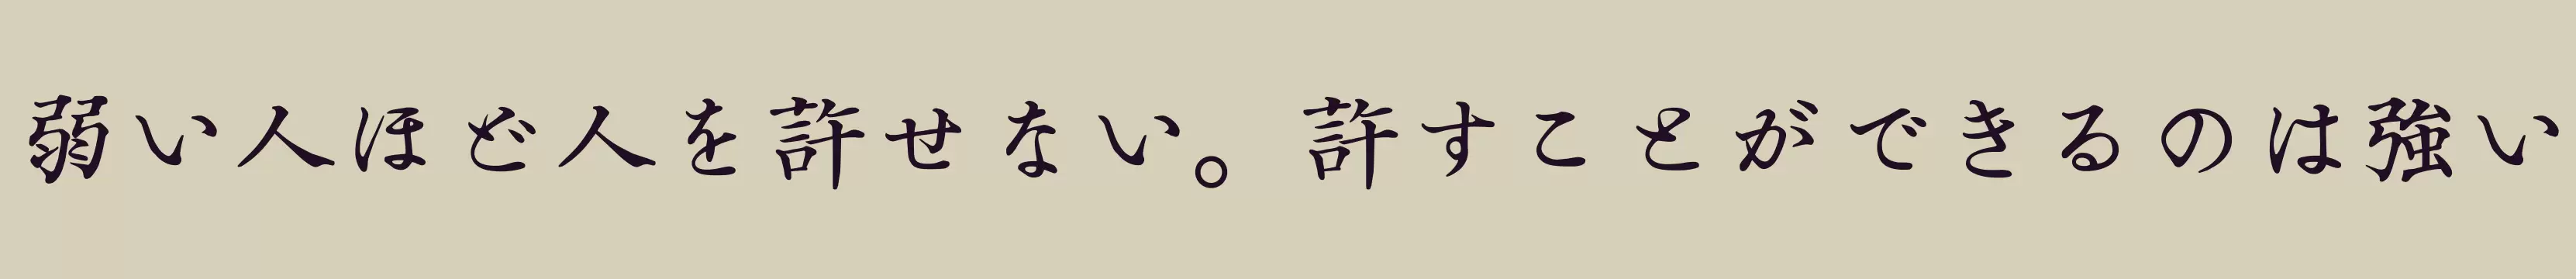 「Iwata SeichouG Pro B」字体效果图